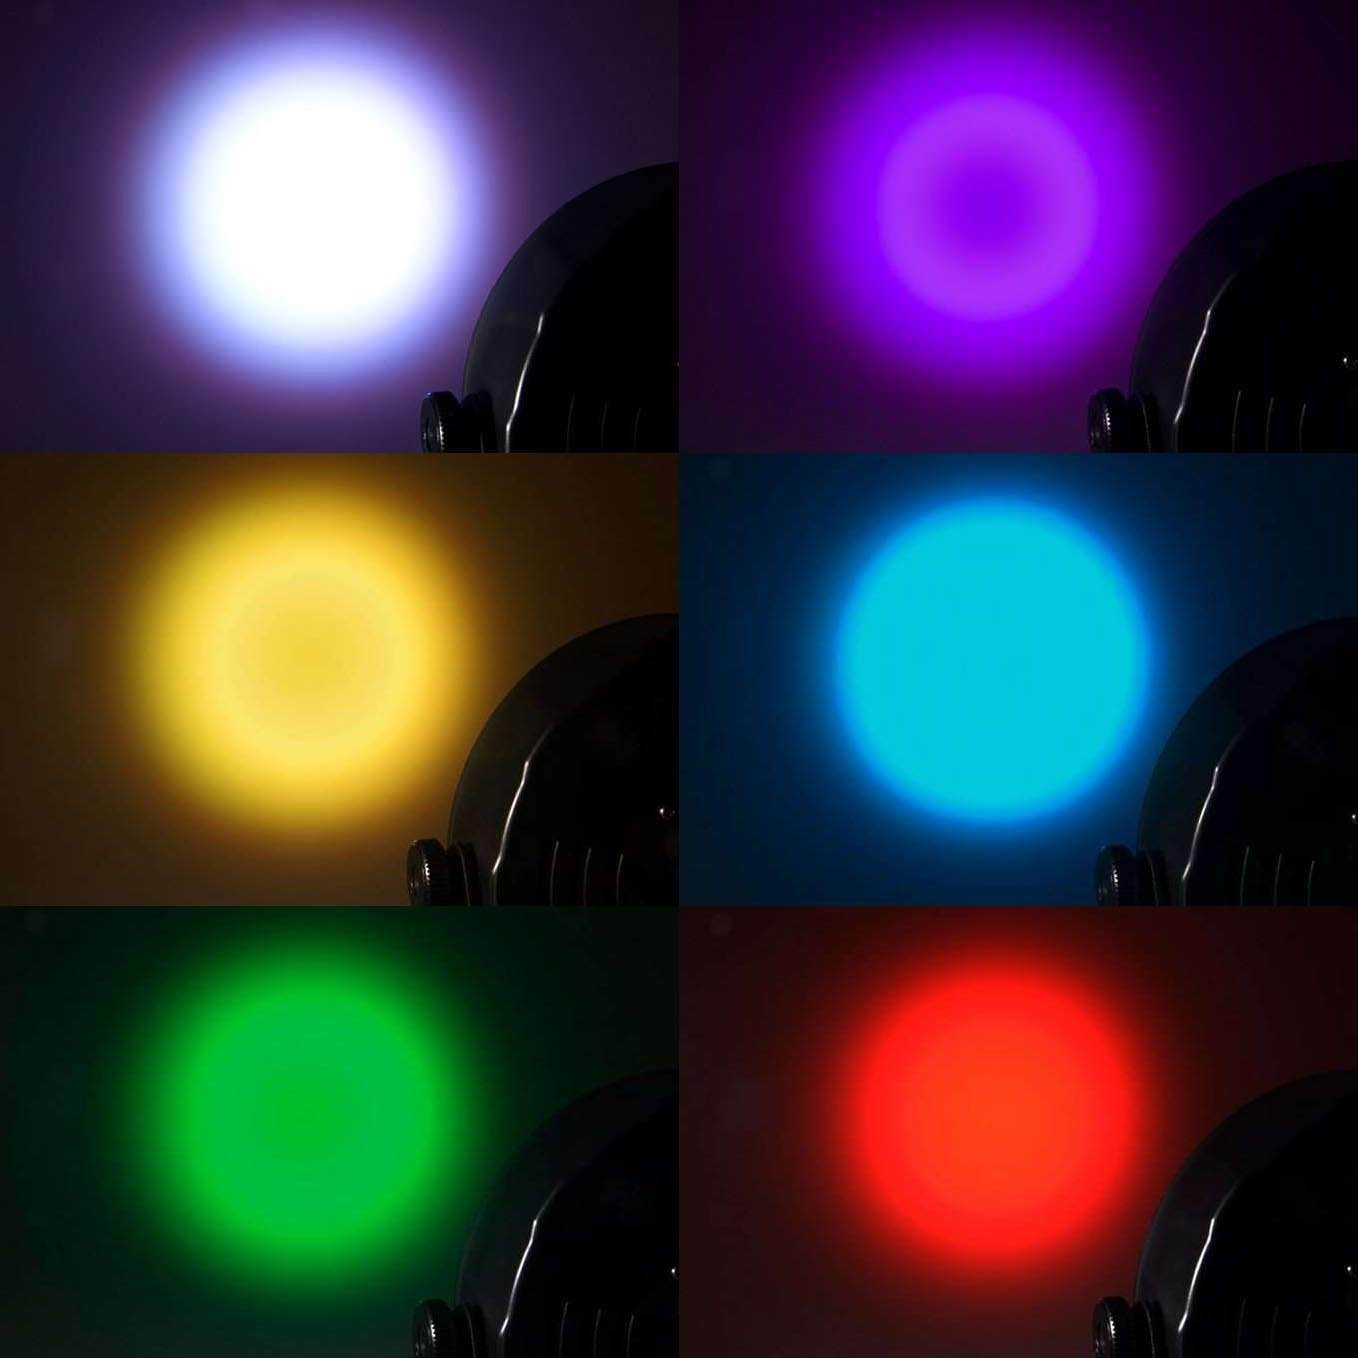 Chauvet DJ SLIMPAR 56 LED RGB DMX Flat possono lavare effetto luce